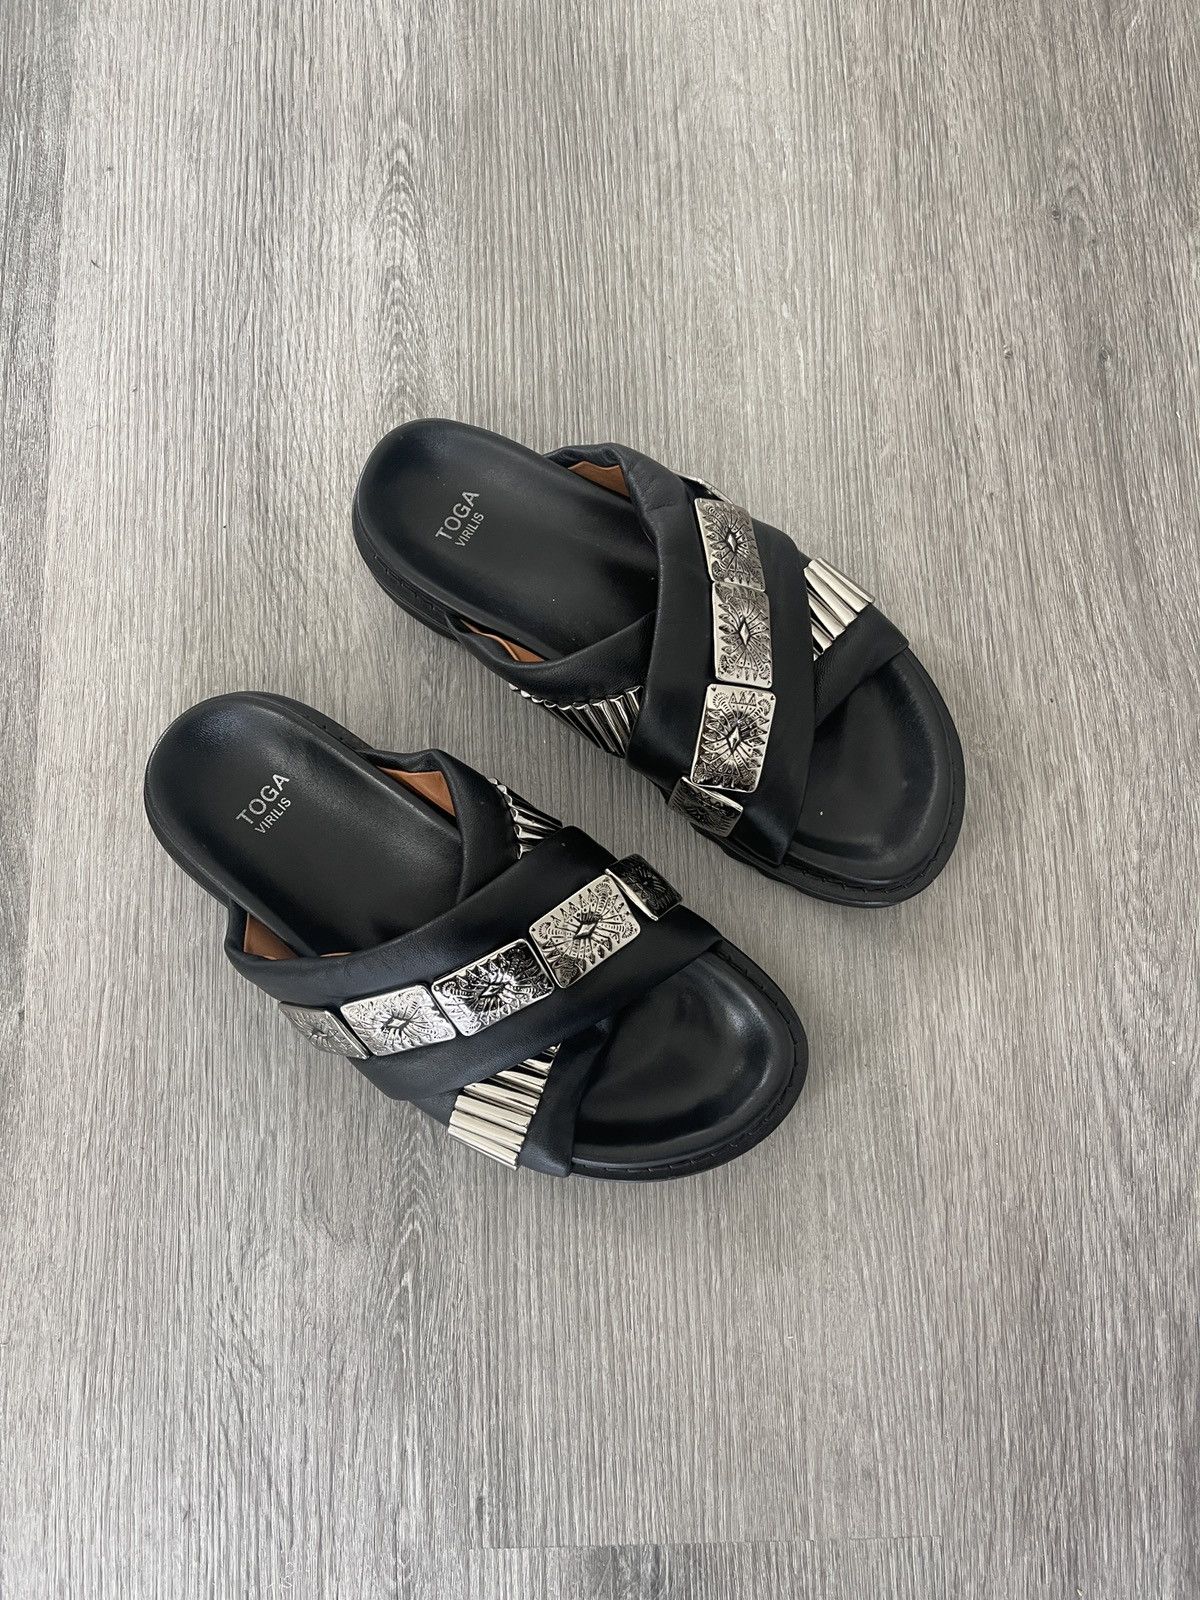 Toga Toga Virilis Black Metal Leather Sandals / Slides | Grailed